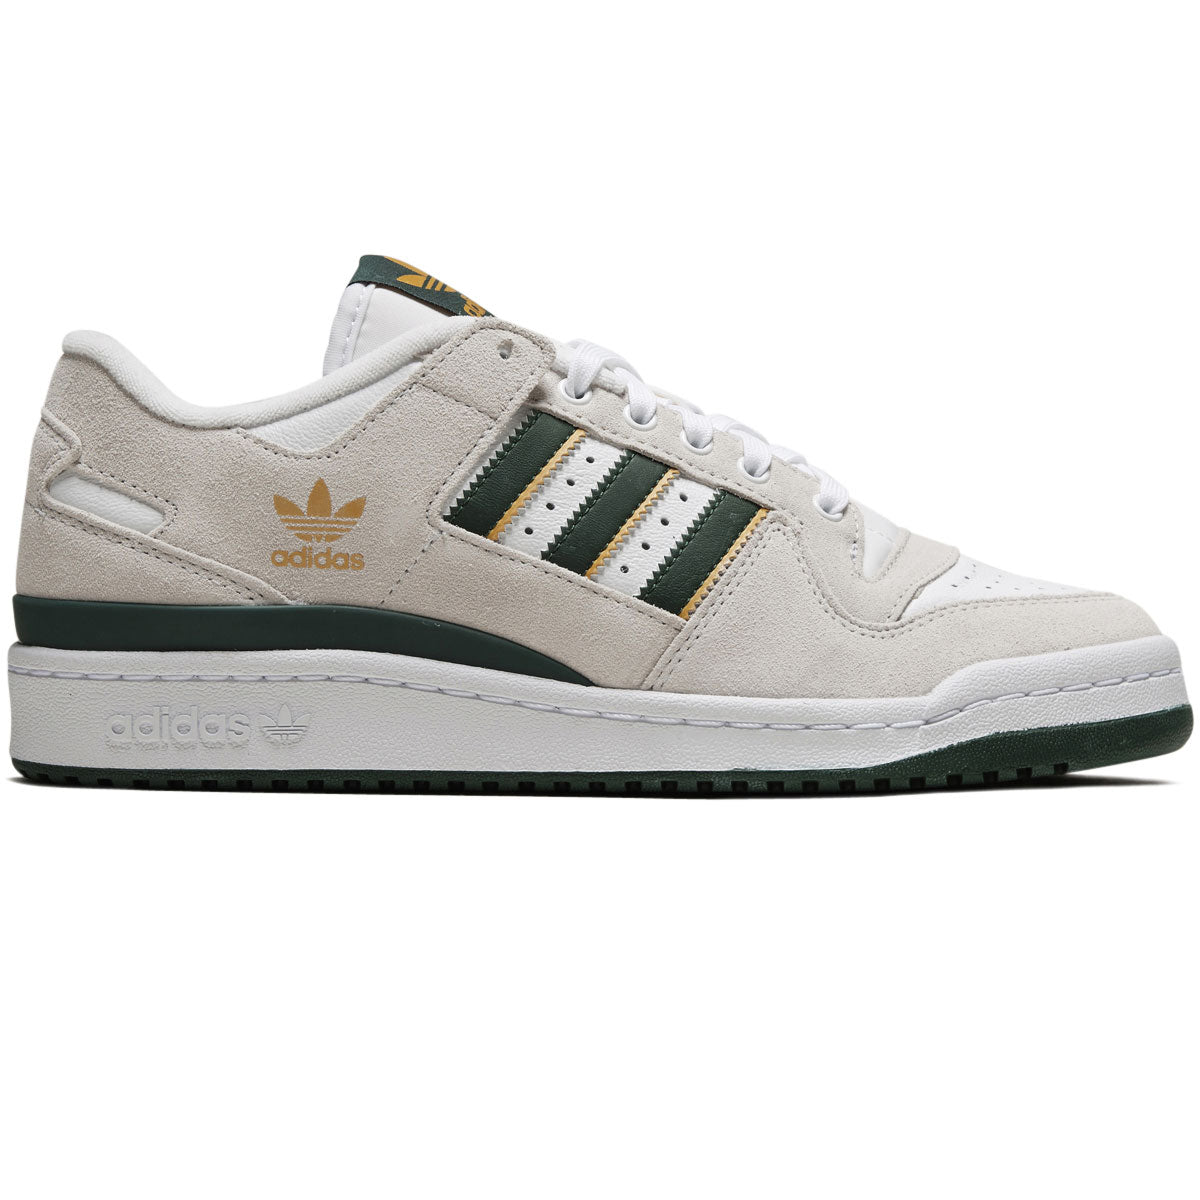 Adidas Forum 84 Low ADV Shoes - Crystal White/Dark Green/Preloved Yellow image 1